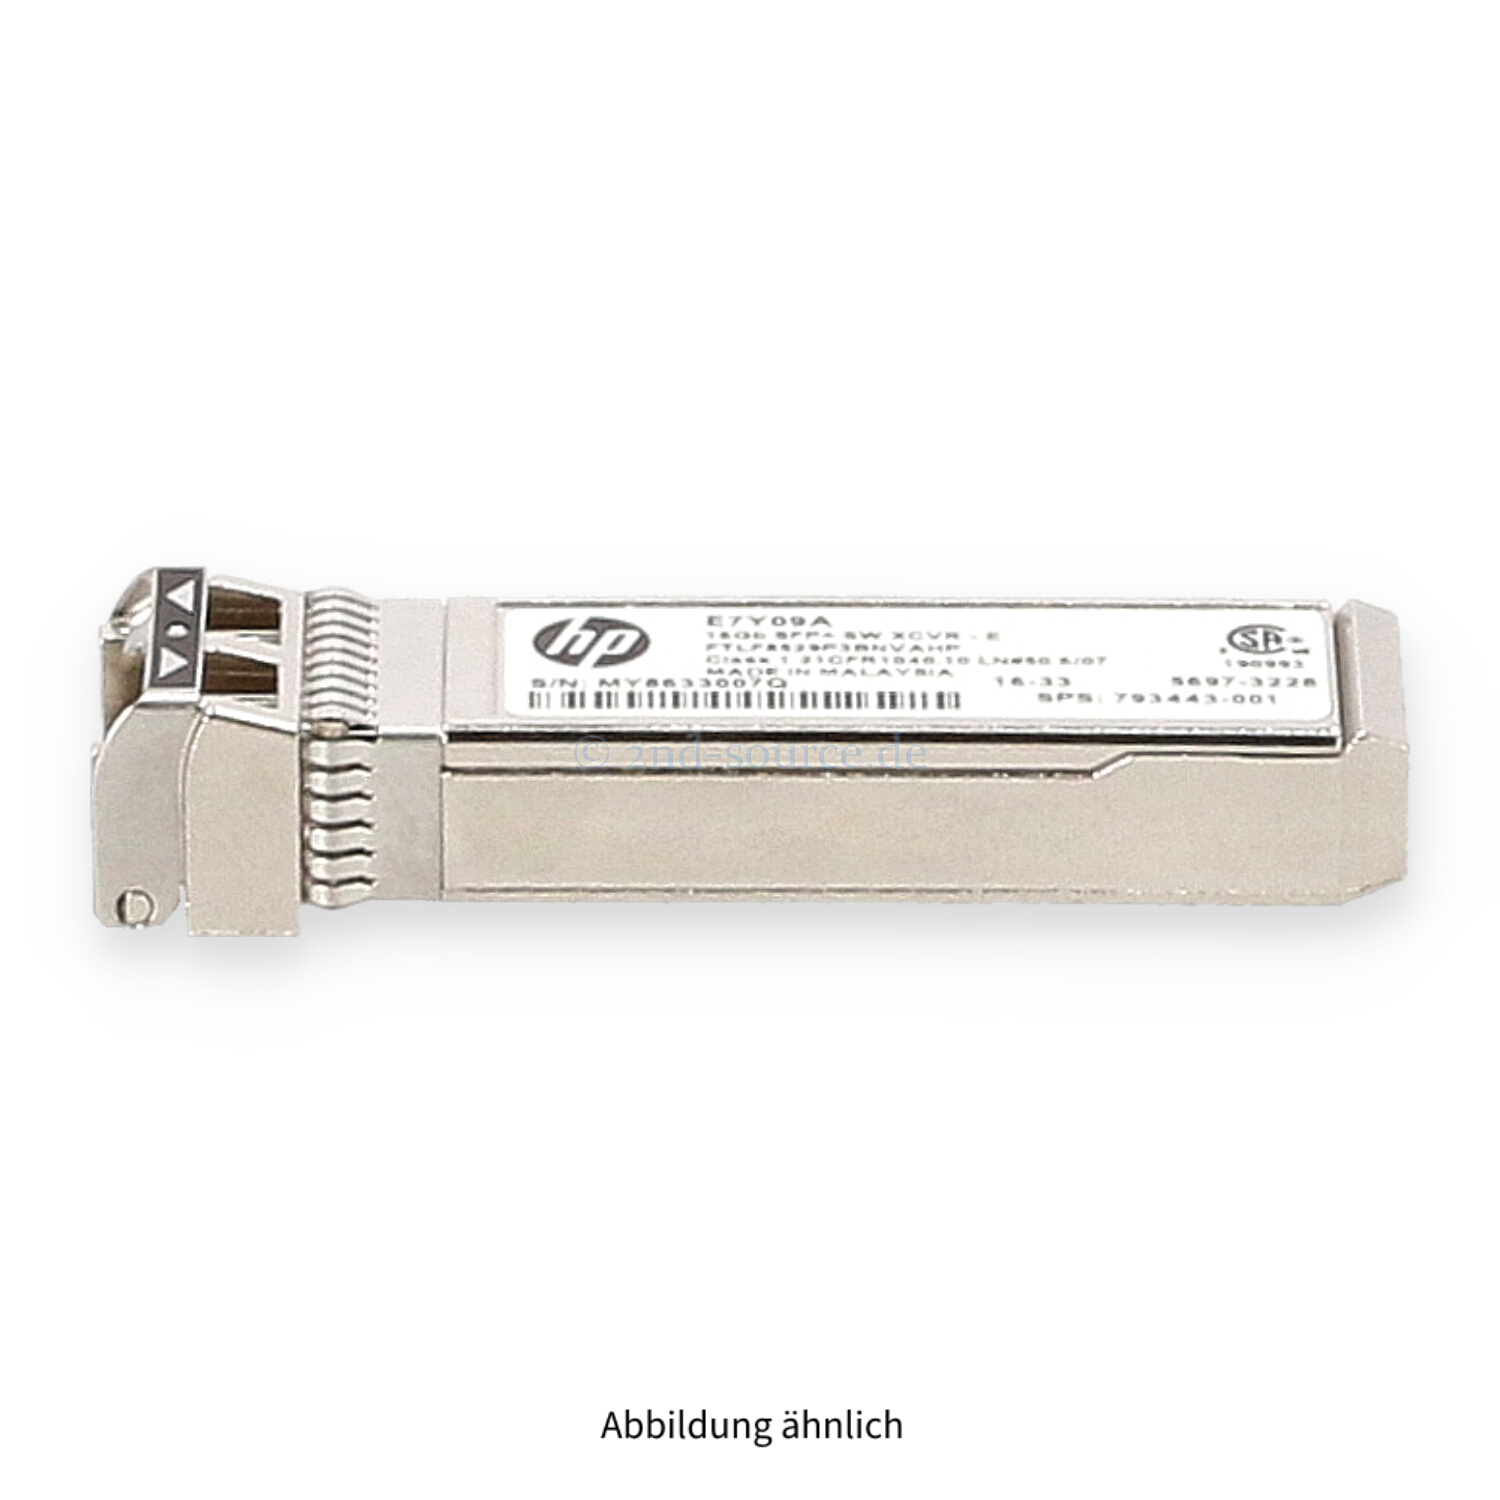 HPE 16GB Shortwave FC SFP+ Transceiver Module E7Y09A E7Y09A-63001 793443-001